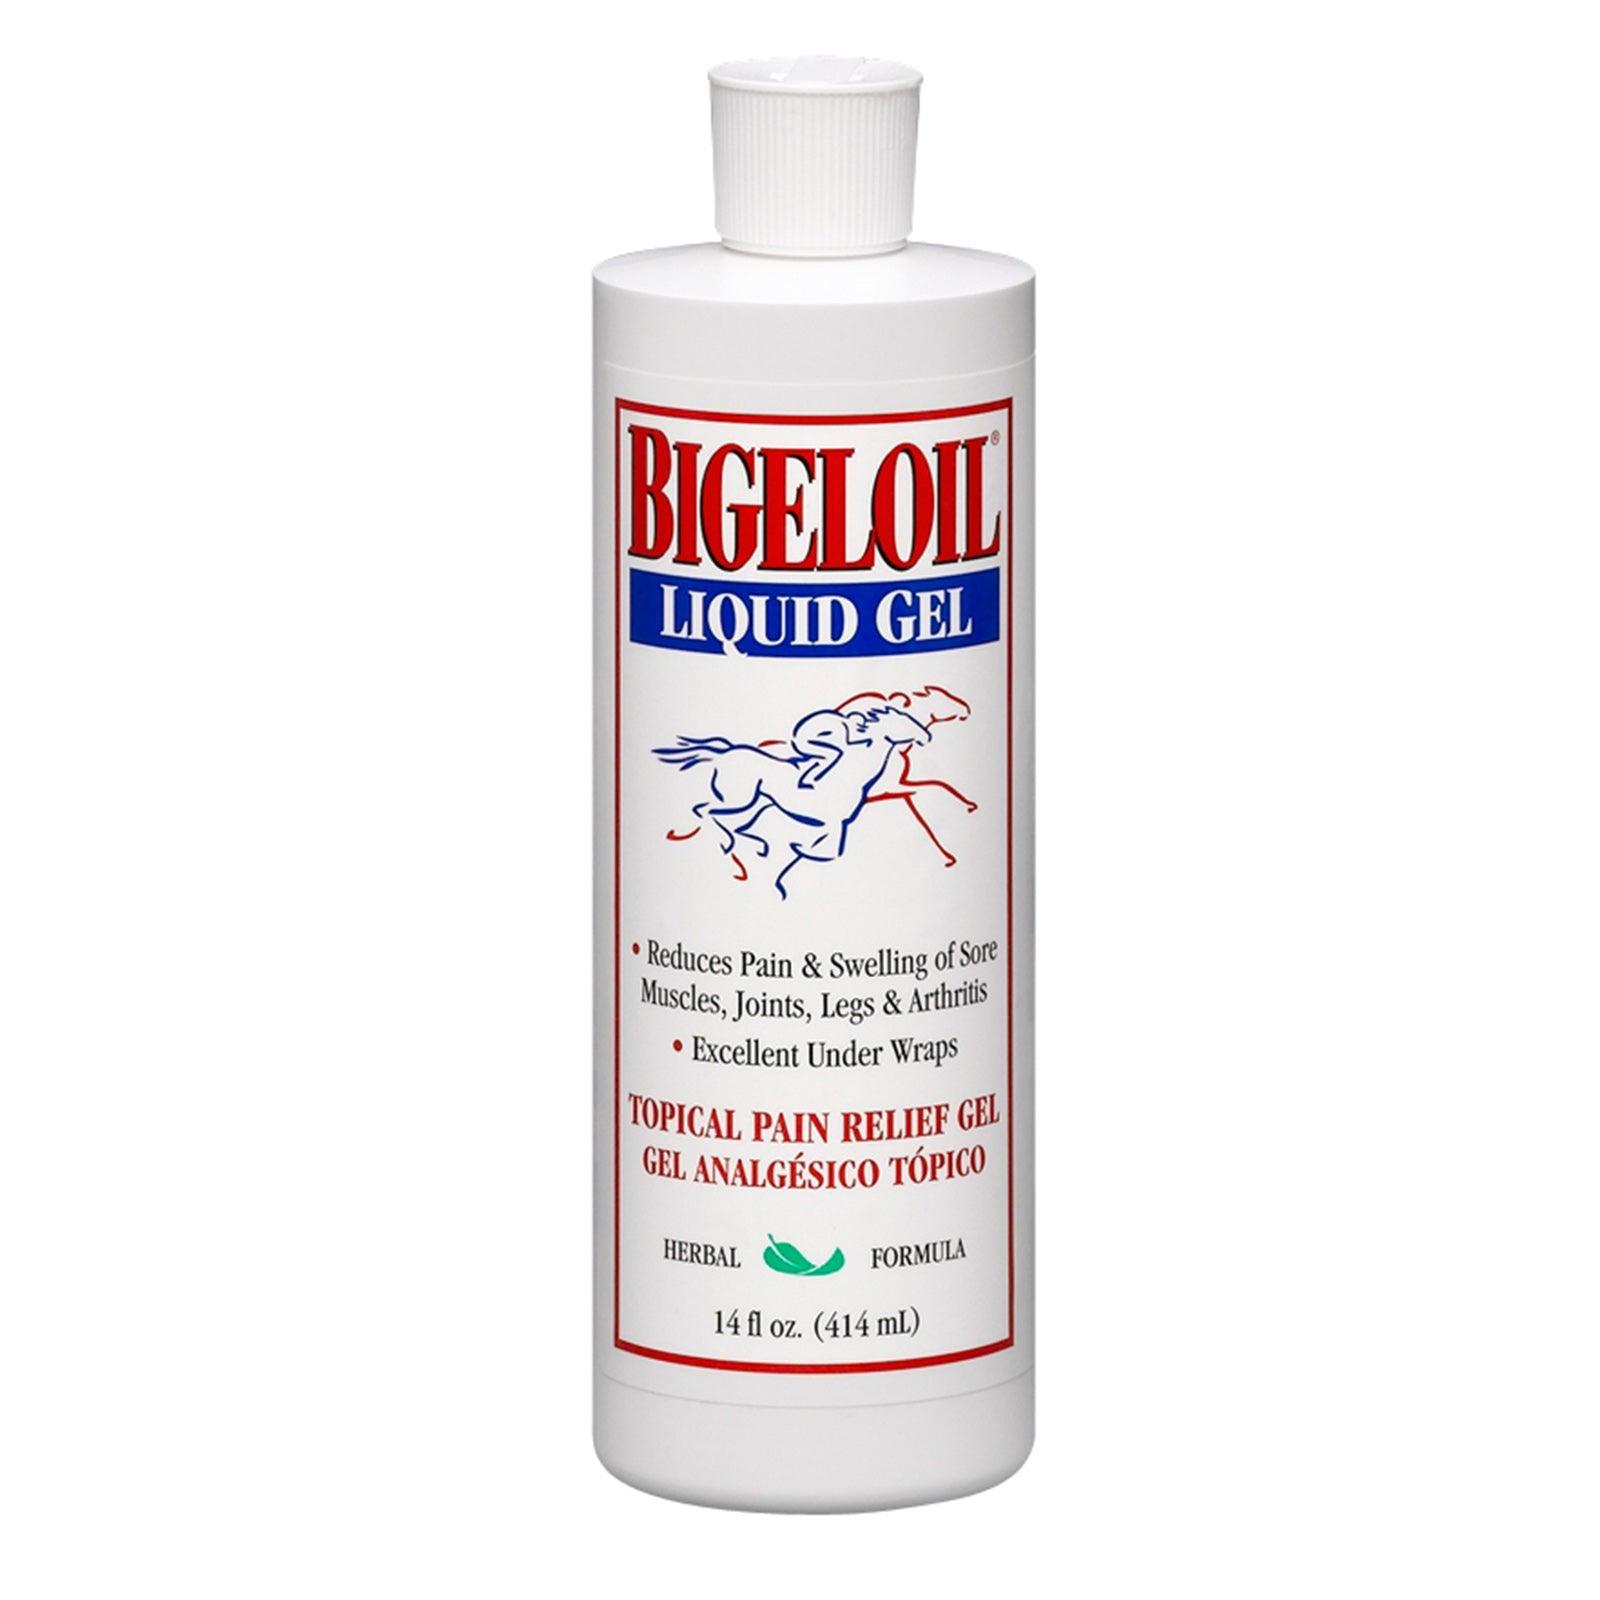 Bigeloil® Liniment Gel Muscle Care absorbine   